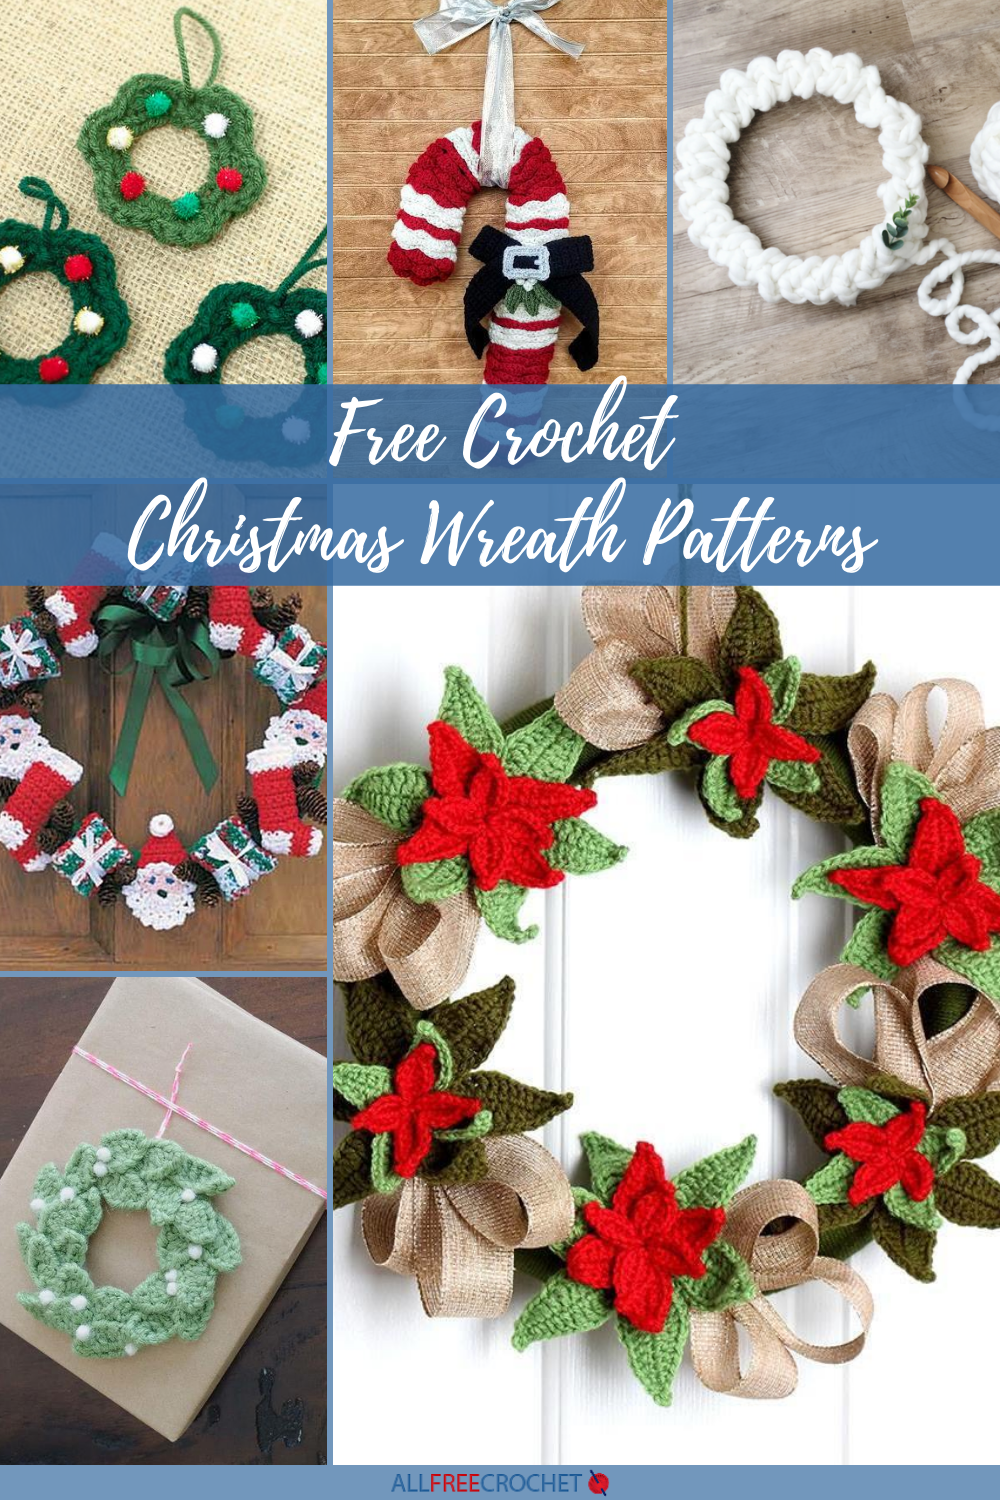 9+ Free Crochet Christmas Wreath Patterns +Decorations ...